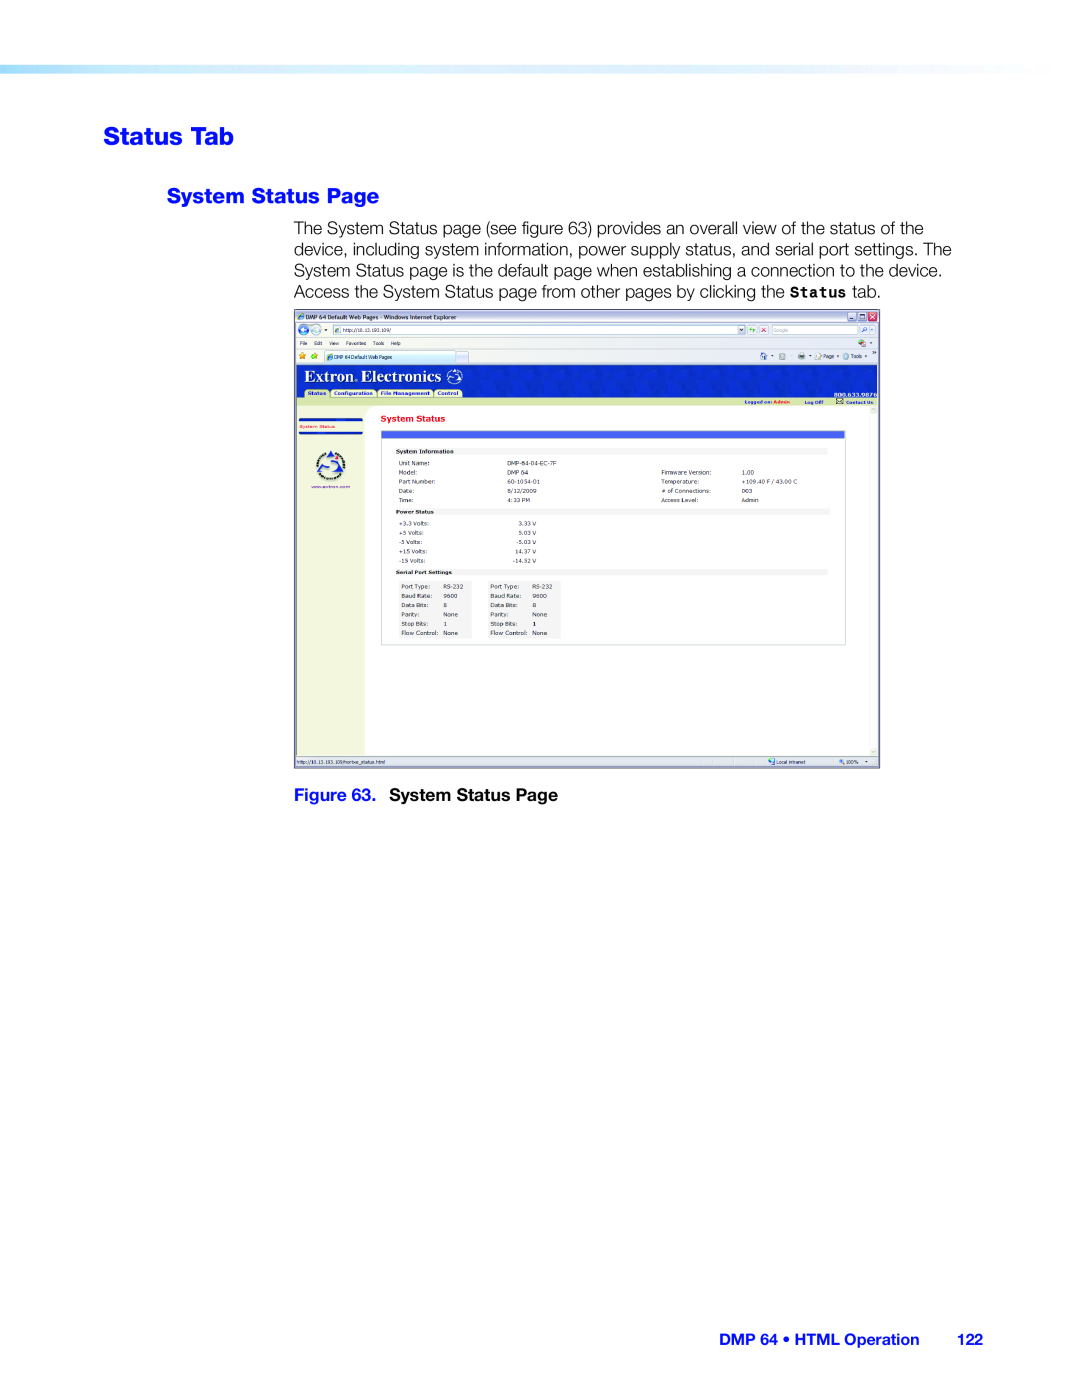 Extron electronic DMP 64 manual Status Tab, System Status Page 